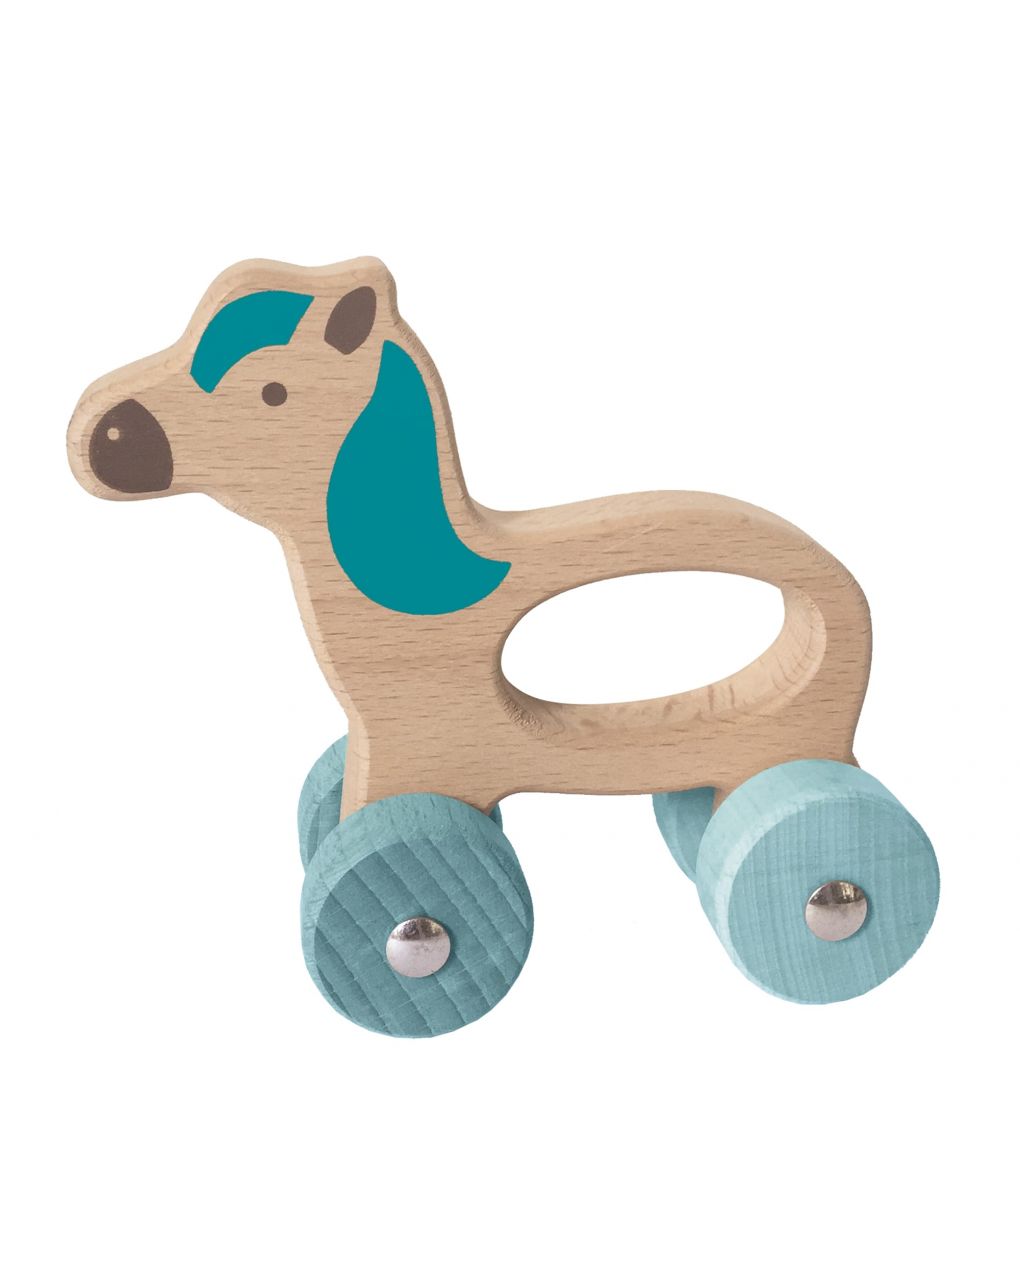 Wood n play - animali in legno con ruote